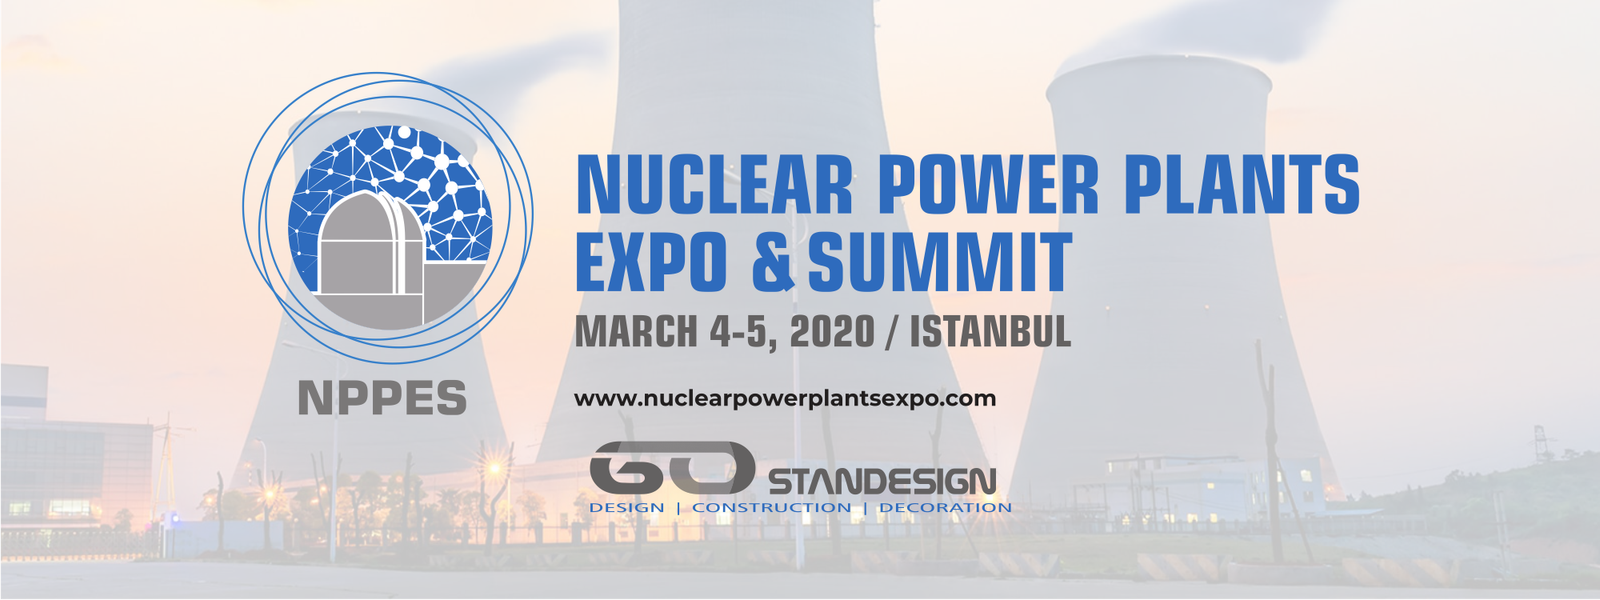 Nuclear Power Plants Expo 2020